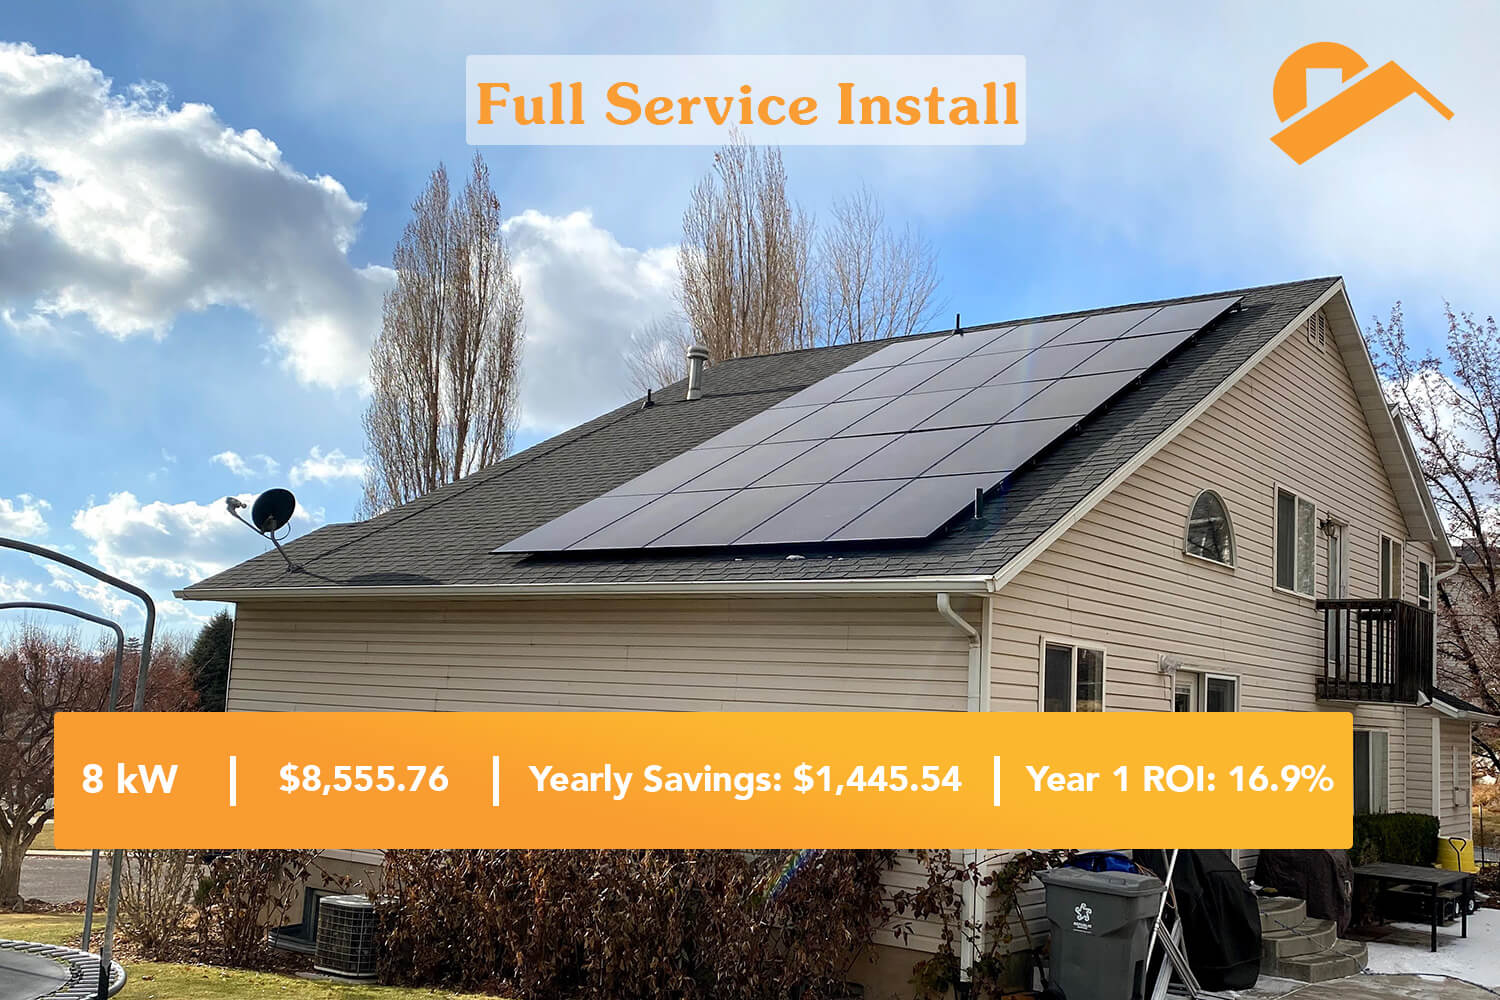 Full-service solar install case study